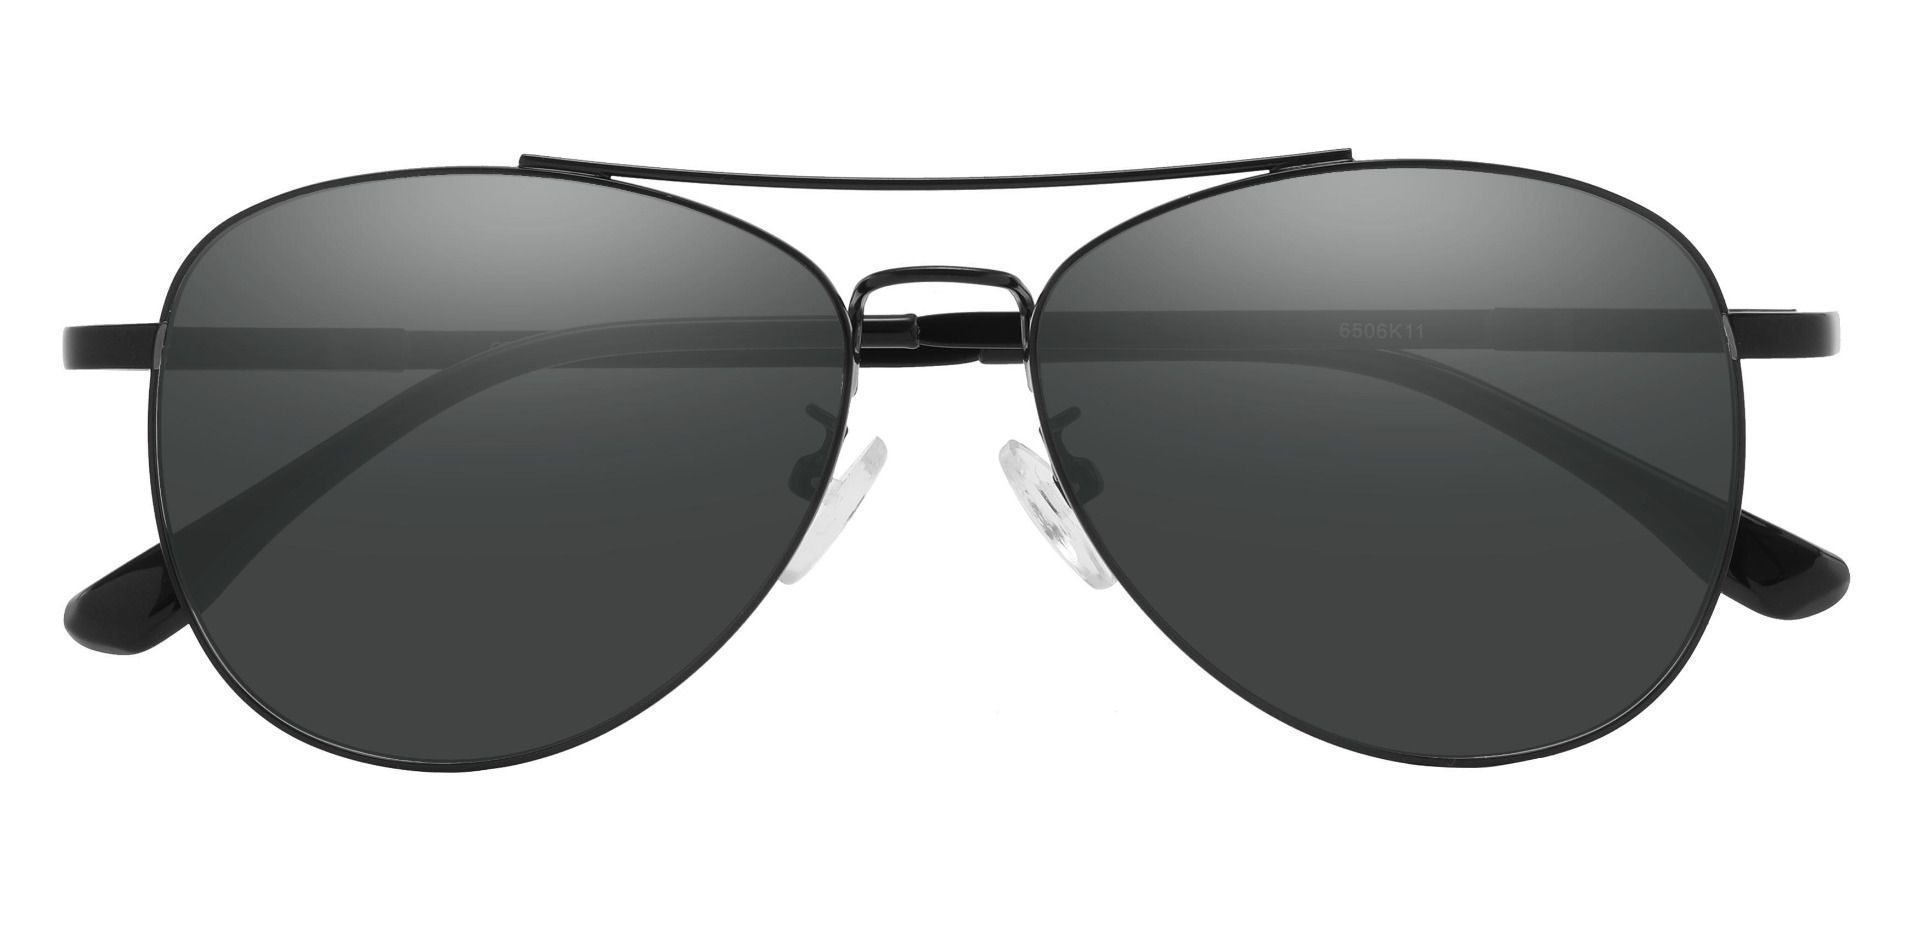 What Face Shape Is Best For Aviator Dark Sunglasses? | ShadyVEU